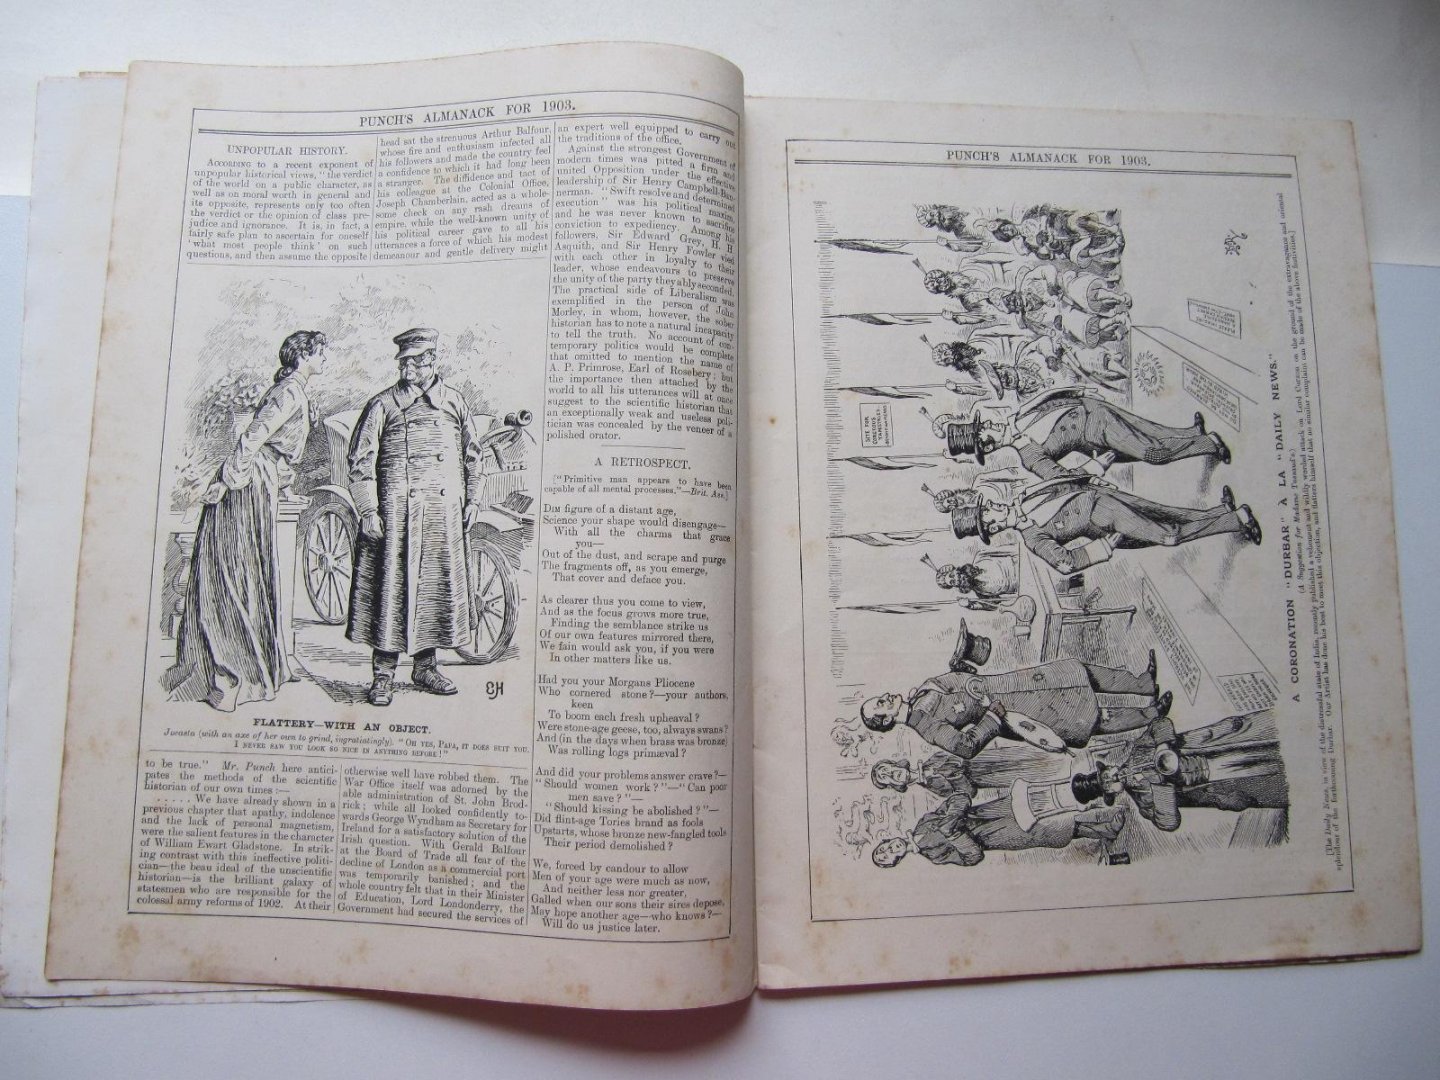 Redactie - "Punch" Almanack - for 1903